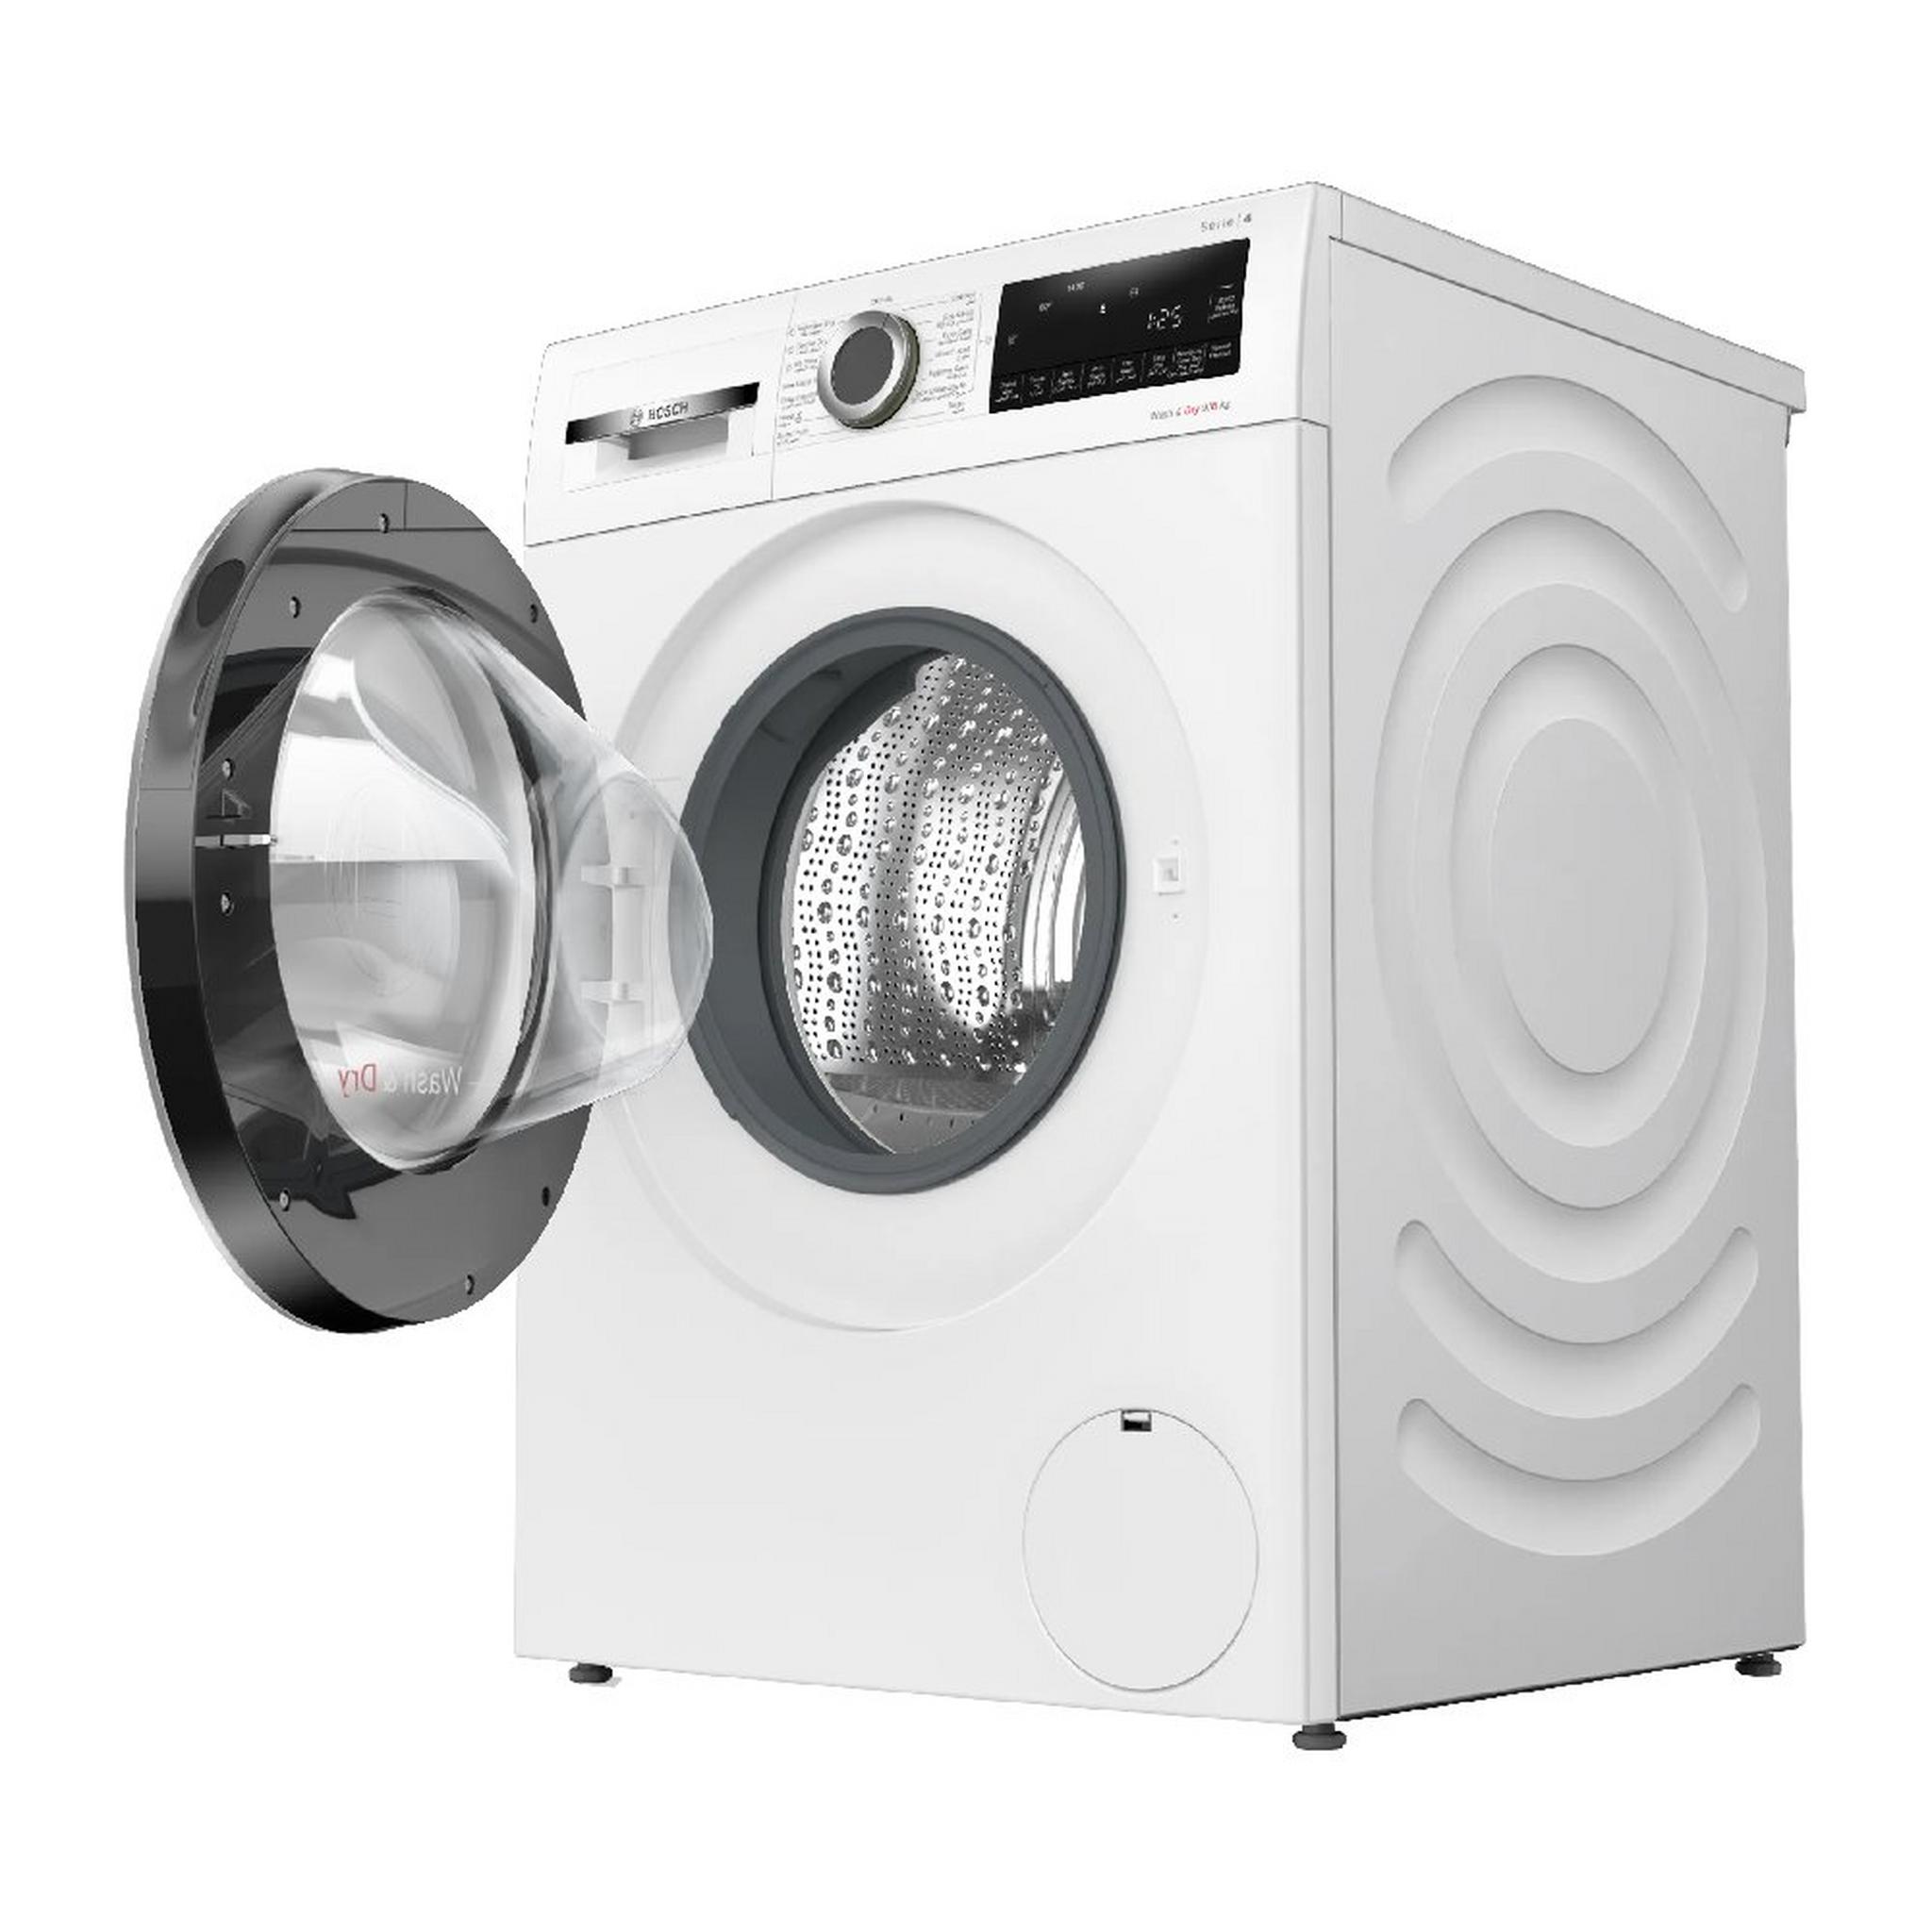 BOSCH Series 4 Front Load Washing Machine 9Kg Washing Capacity 6Kg Drying Capacity WNA244X0GC - White